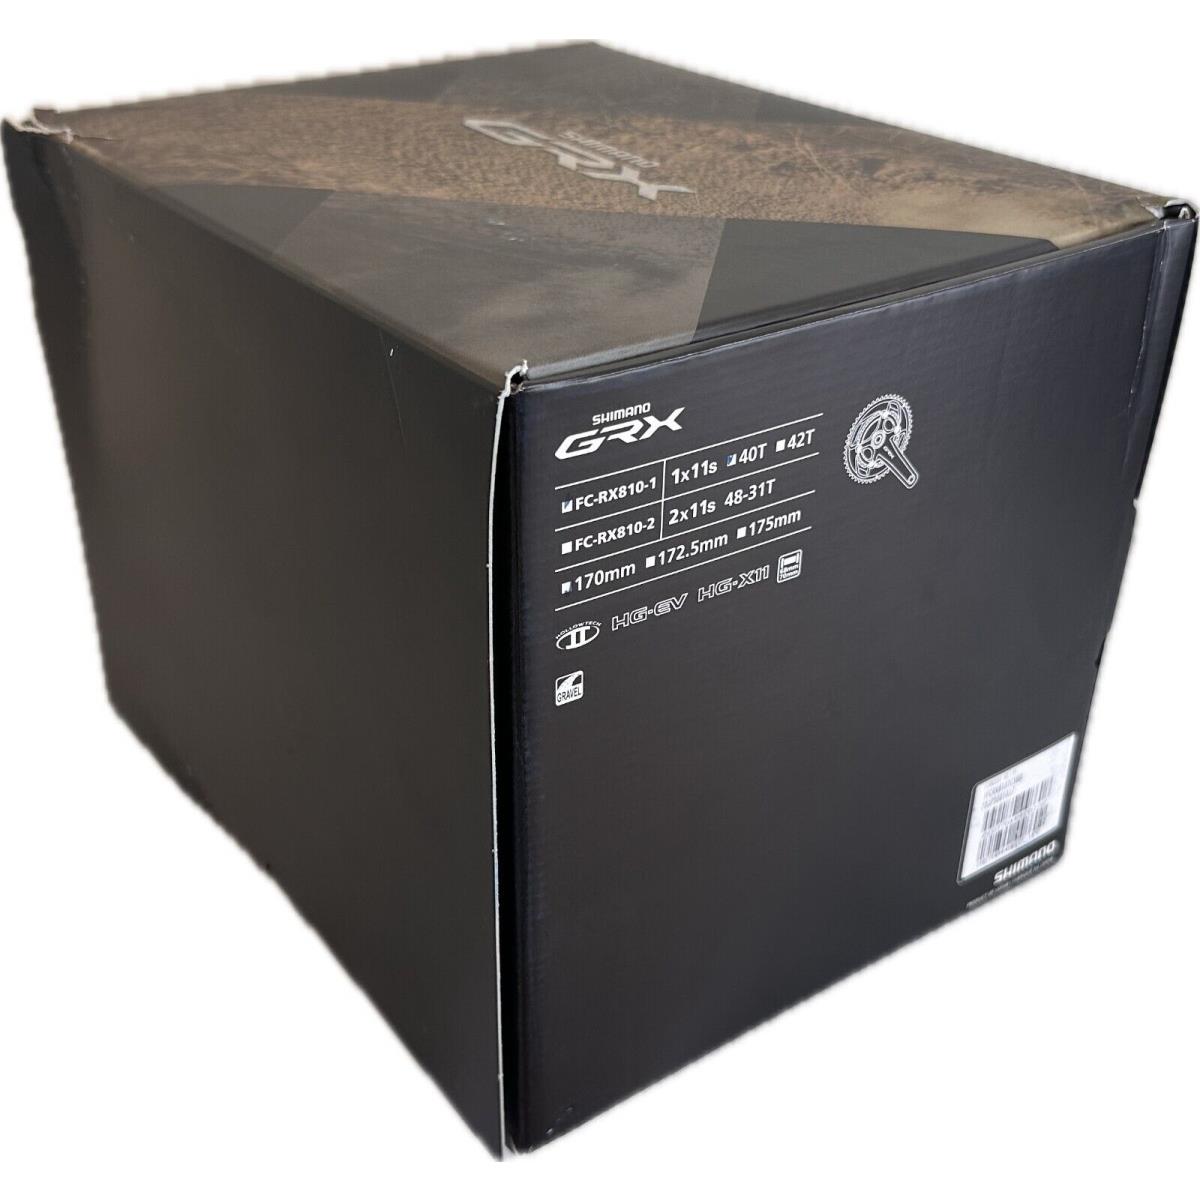 Shimano Grx FC-RX810-1 1x11s 40T 170mm / Box Slightly Dented